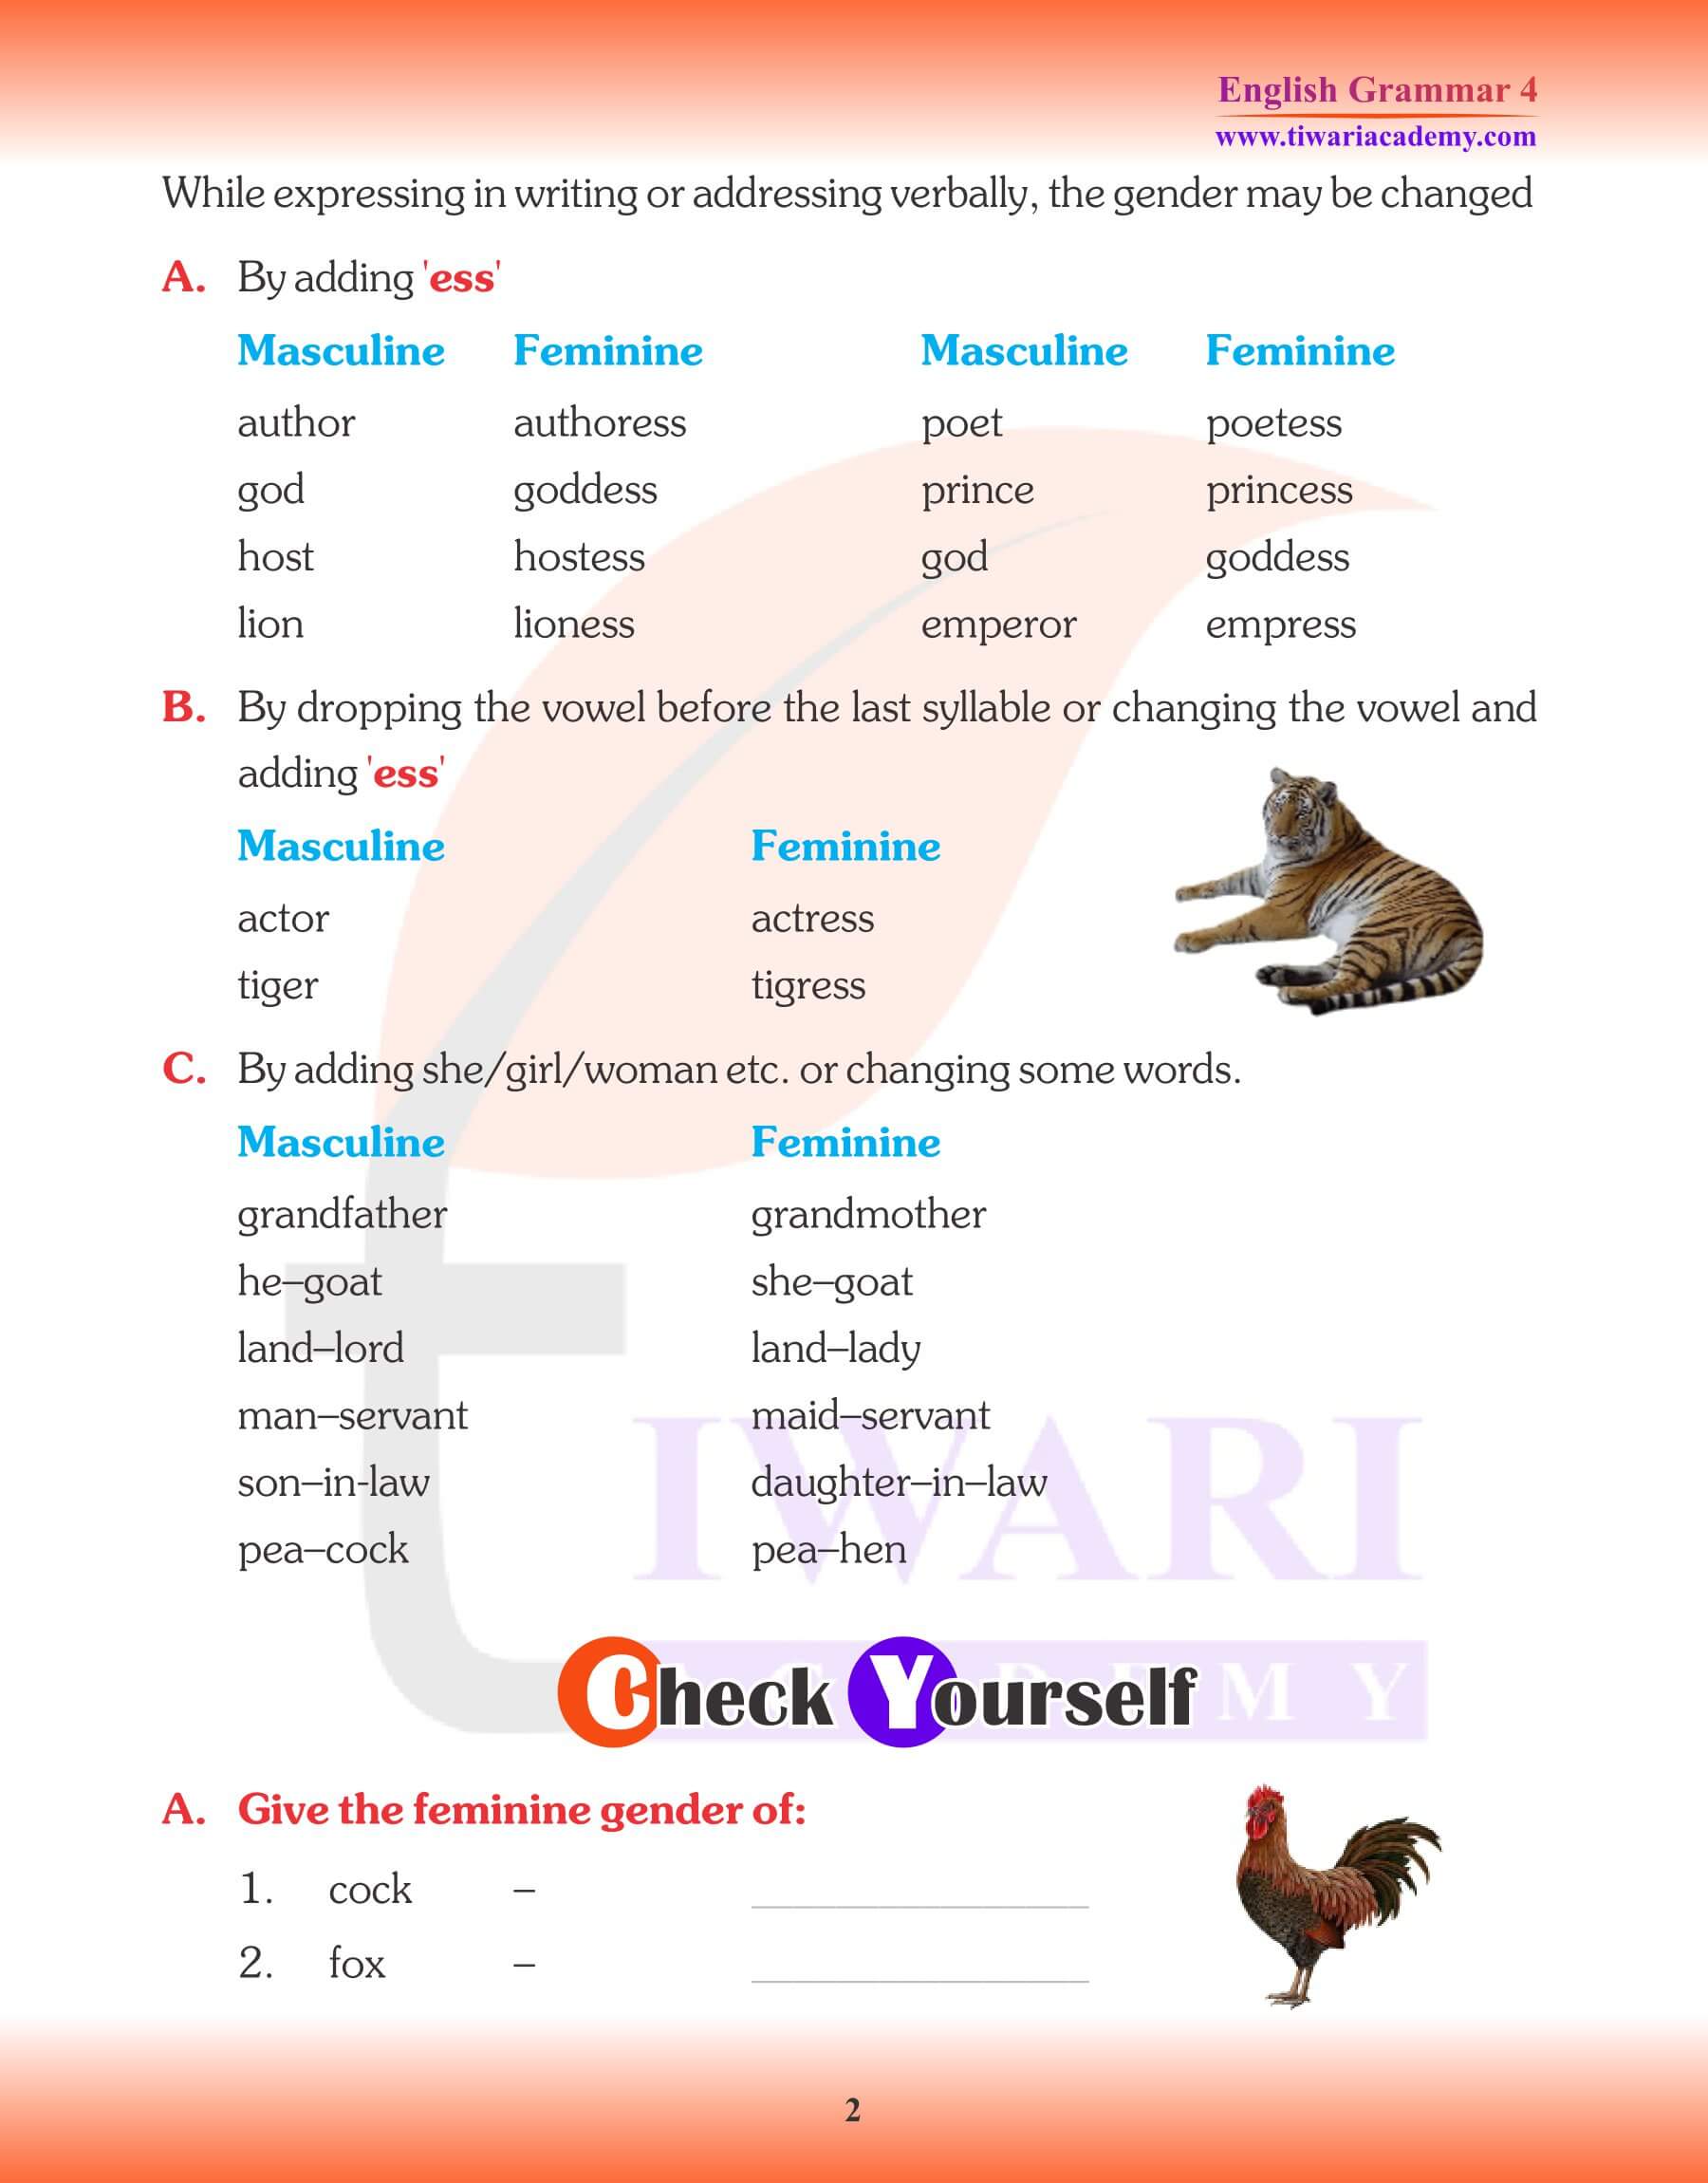 Class 4 English Grammar Revision of The Noun Gender